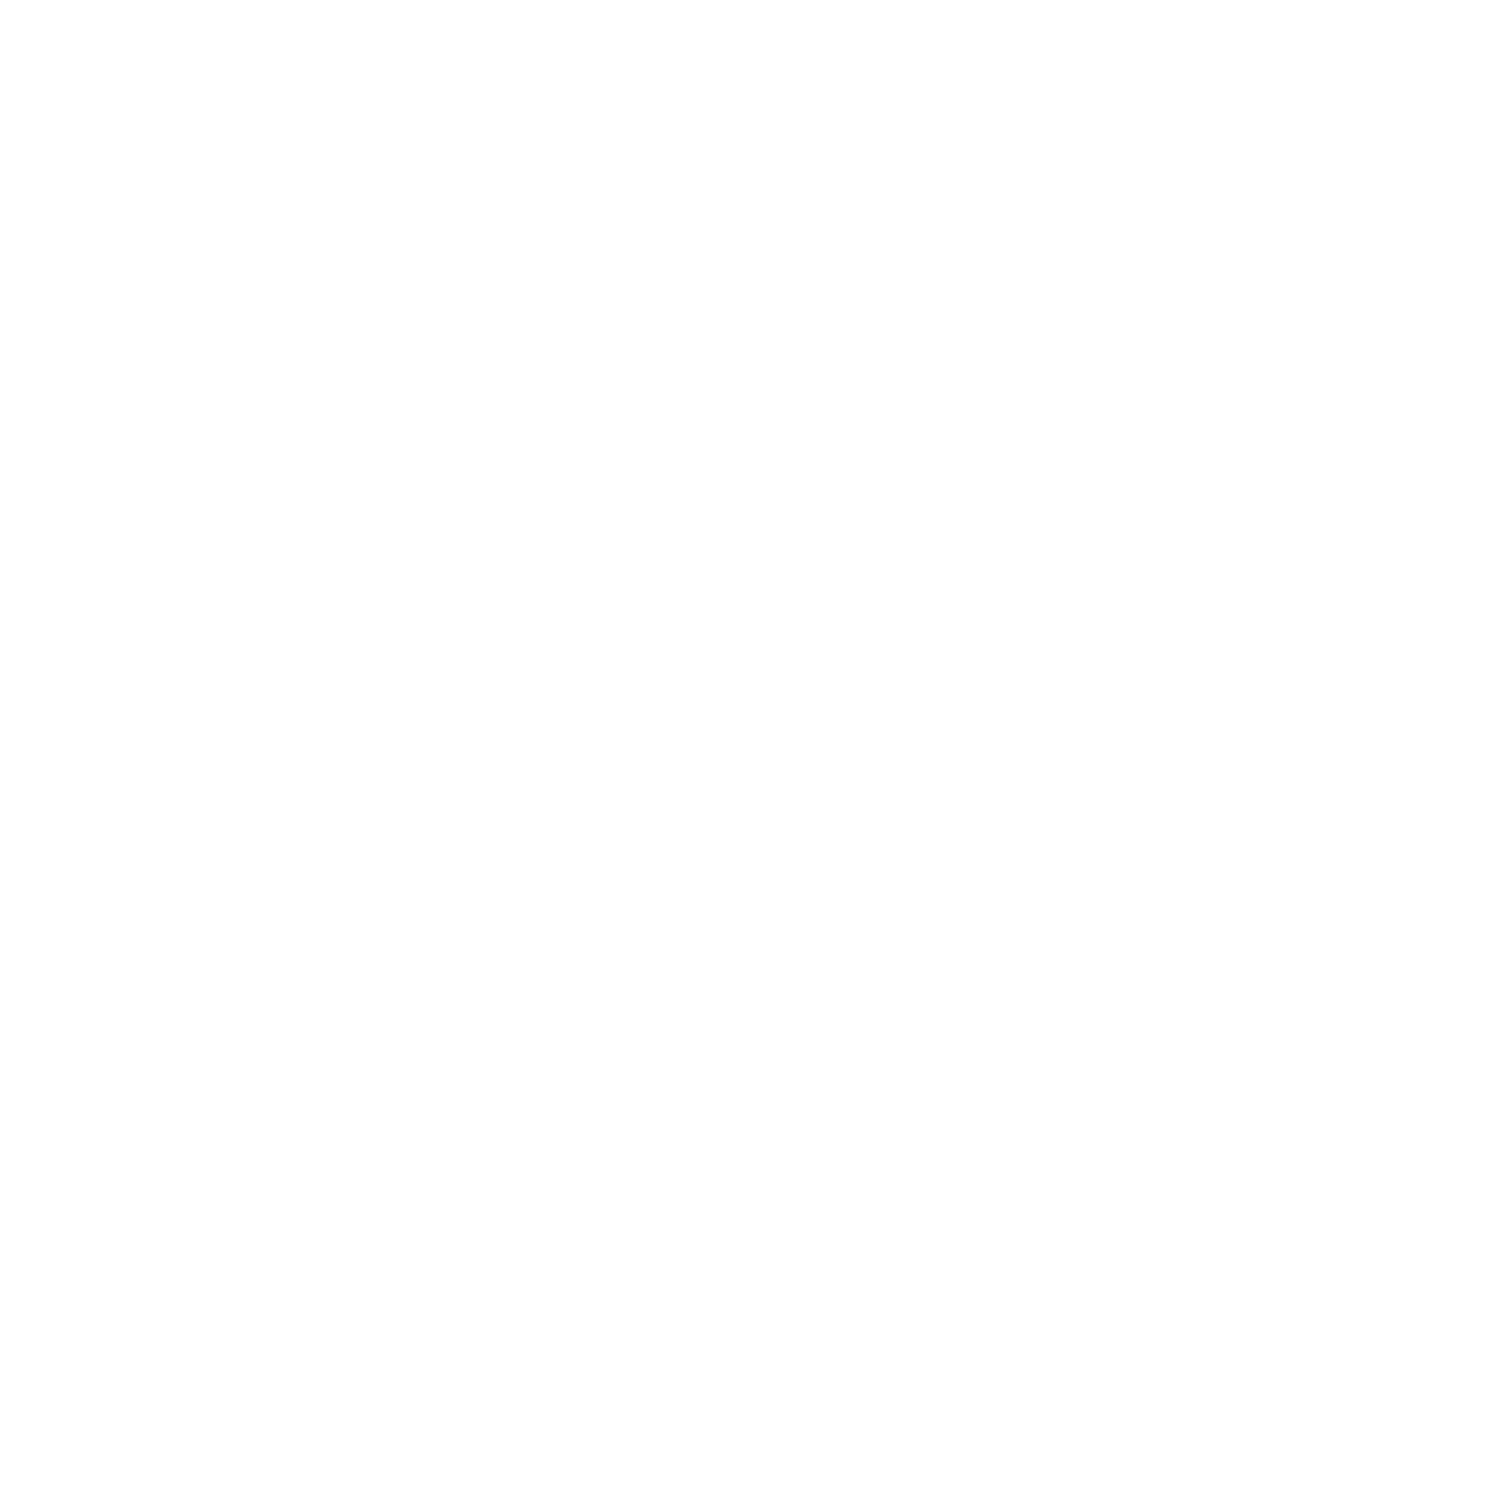 Ribbon Communications logo for dark backgrounds (transparent PNG)